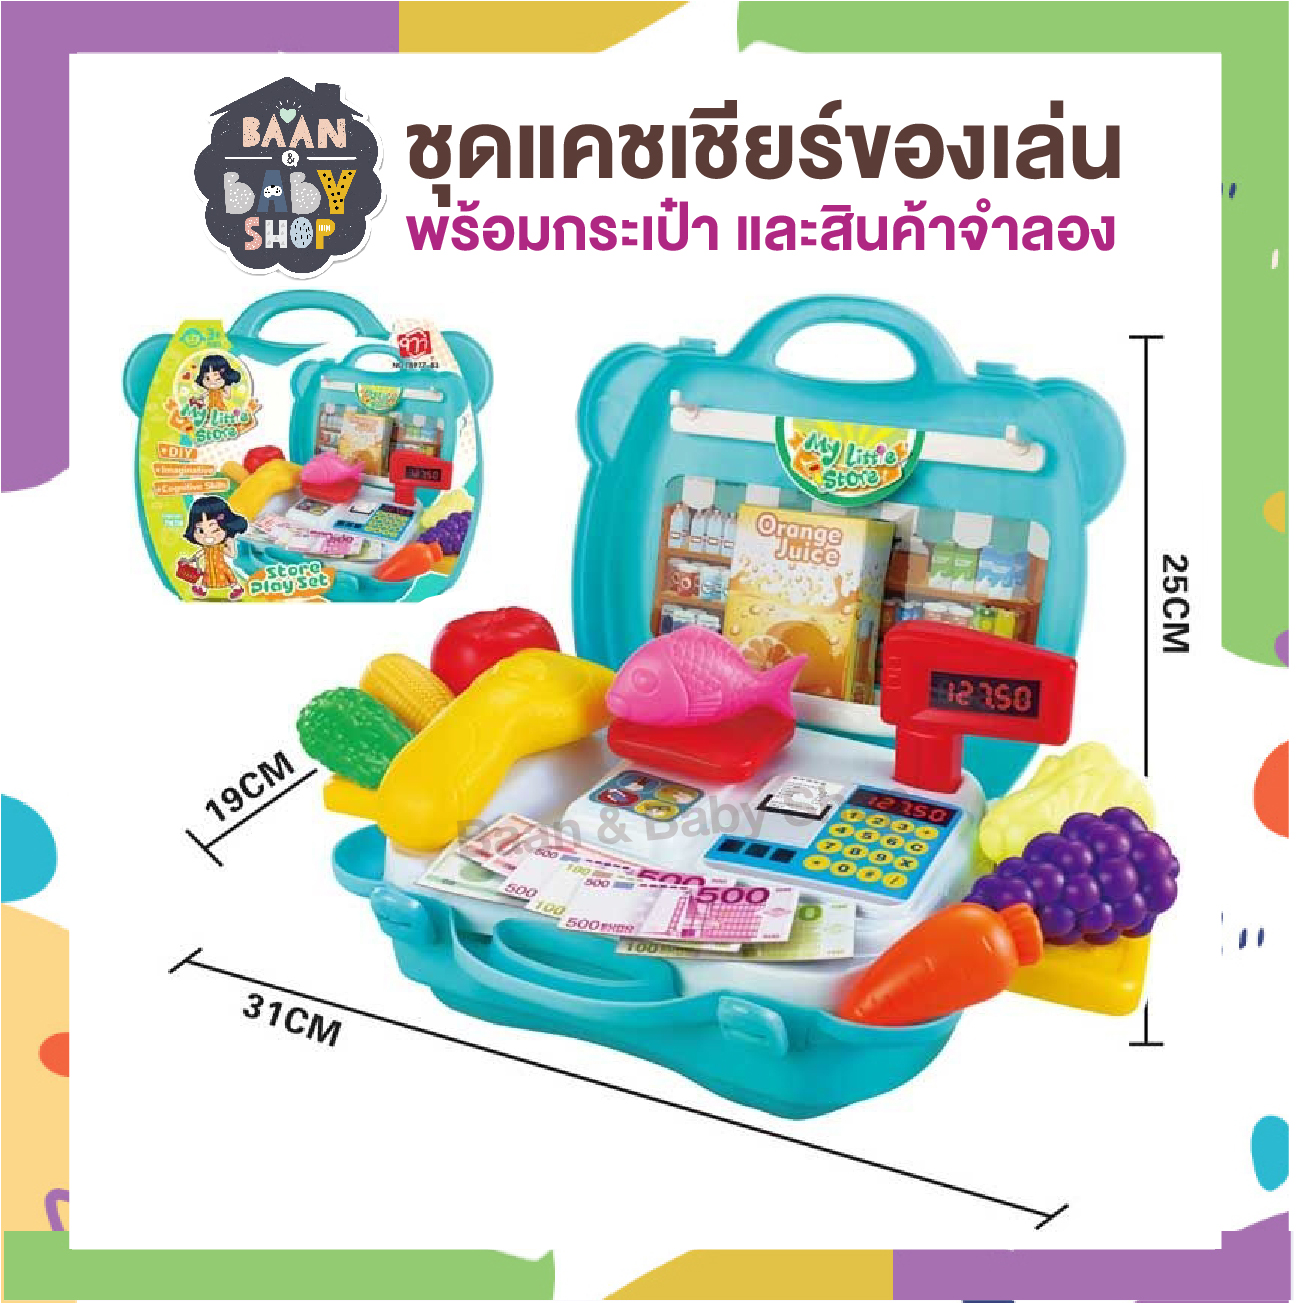 Baan & Baby Shop ชุดแคชเชียร์ของเล่น พร้อมกระเป๋า และสินค้าจำลอง  เครื่องเก็บเงิน เครื่องคิดเงิน แคชเชียร์เด็ก Cash Register Cashier Toy Set with Suitcase Baggage TB977-83